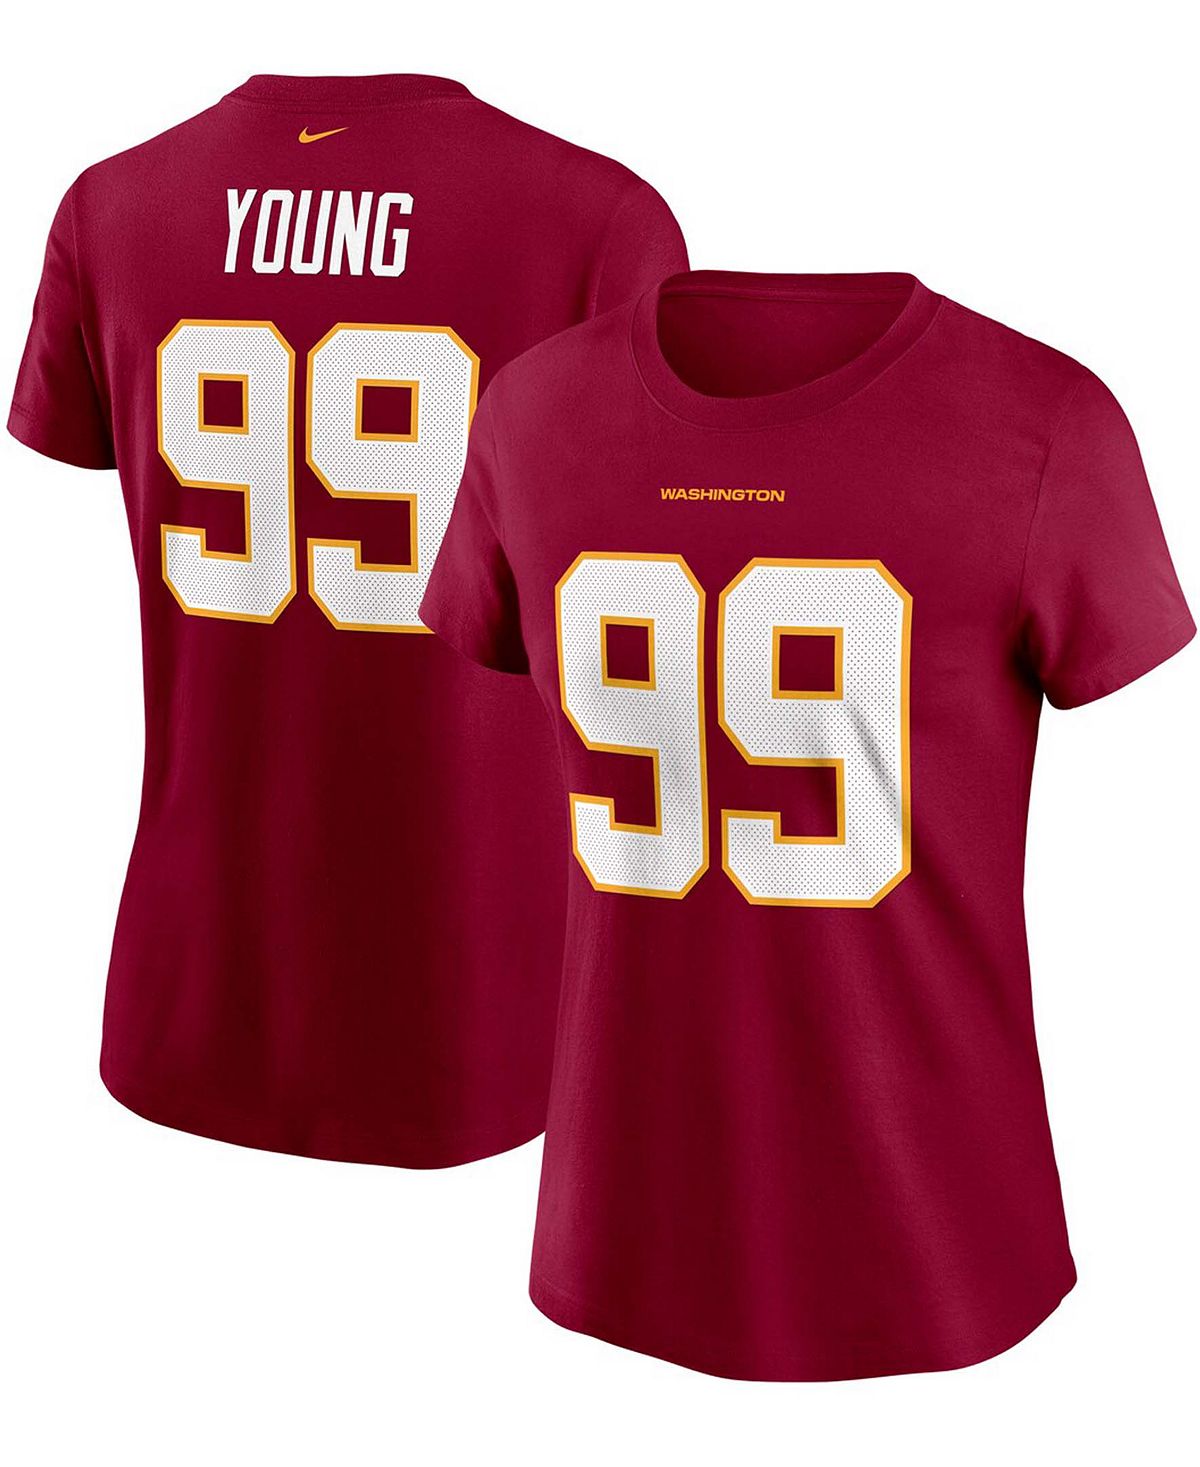 Женская футболка Chase Young Burgundy Washington Football Team с названием и номером Nike